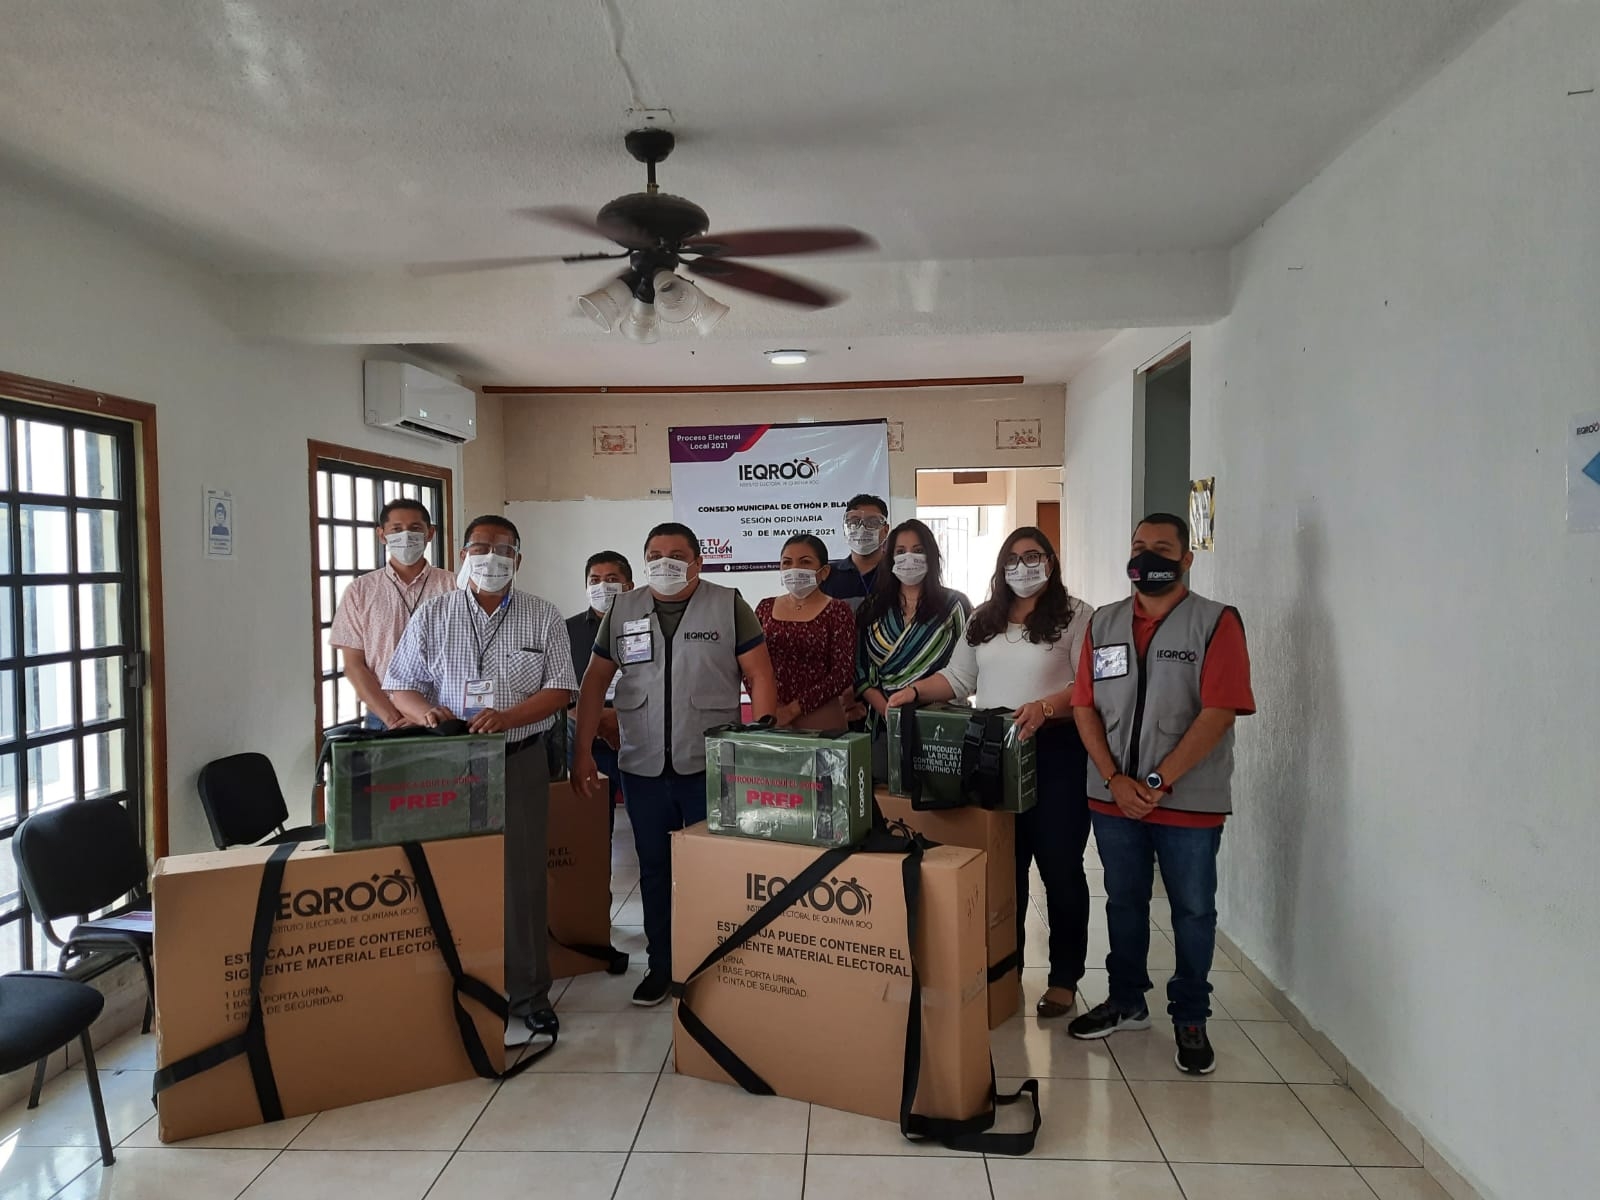 Elecciones Quintana Roo: Ieqroo inicia entrega de paquetes electorales en el estado